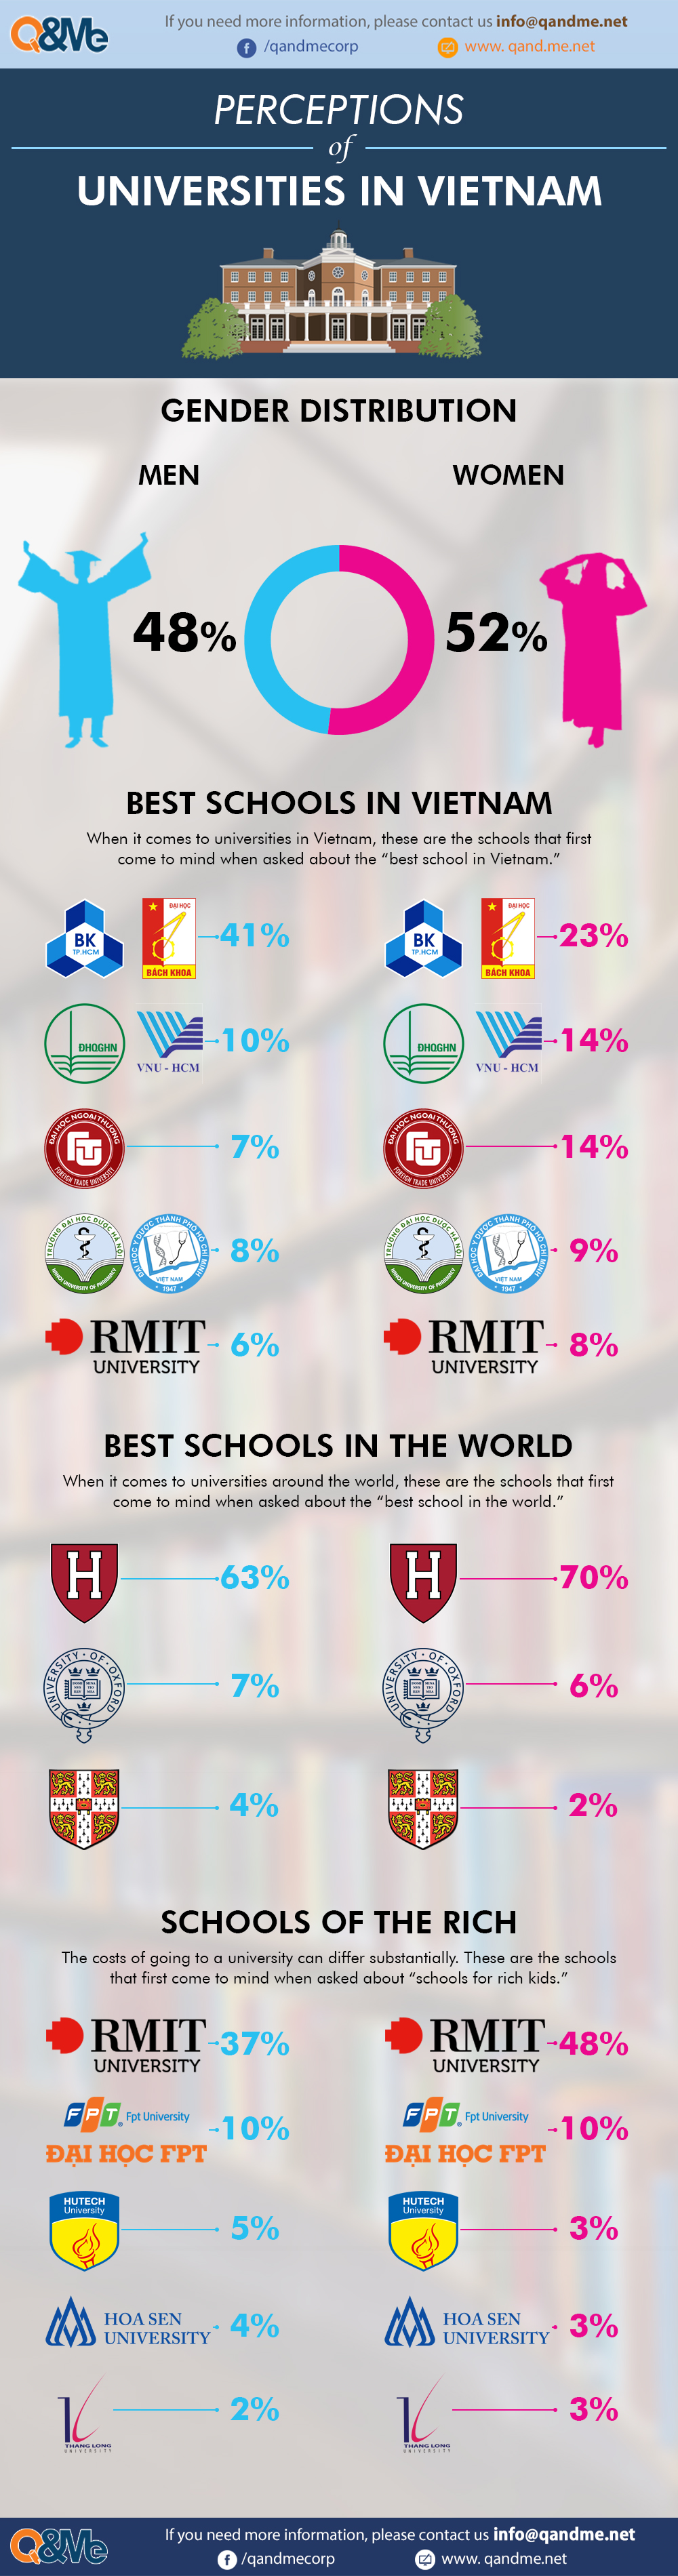 Vietnamese perceptions of universities